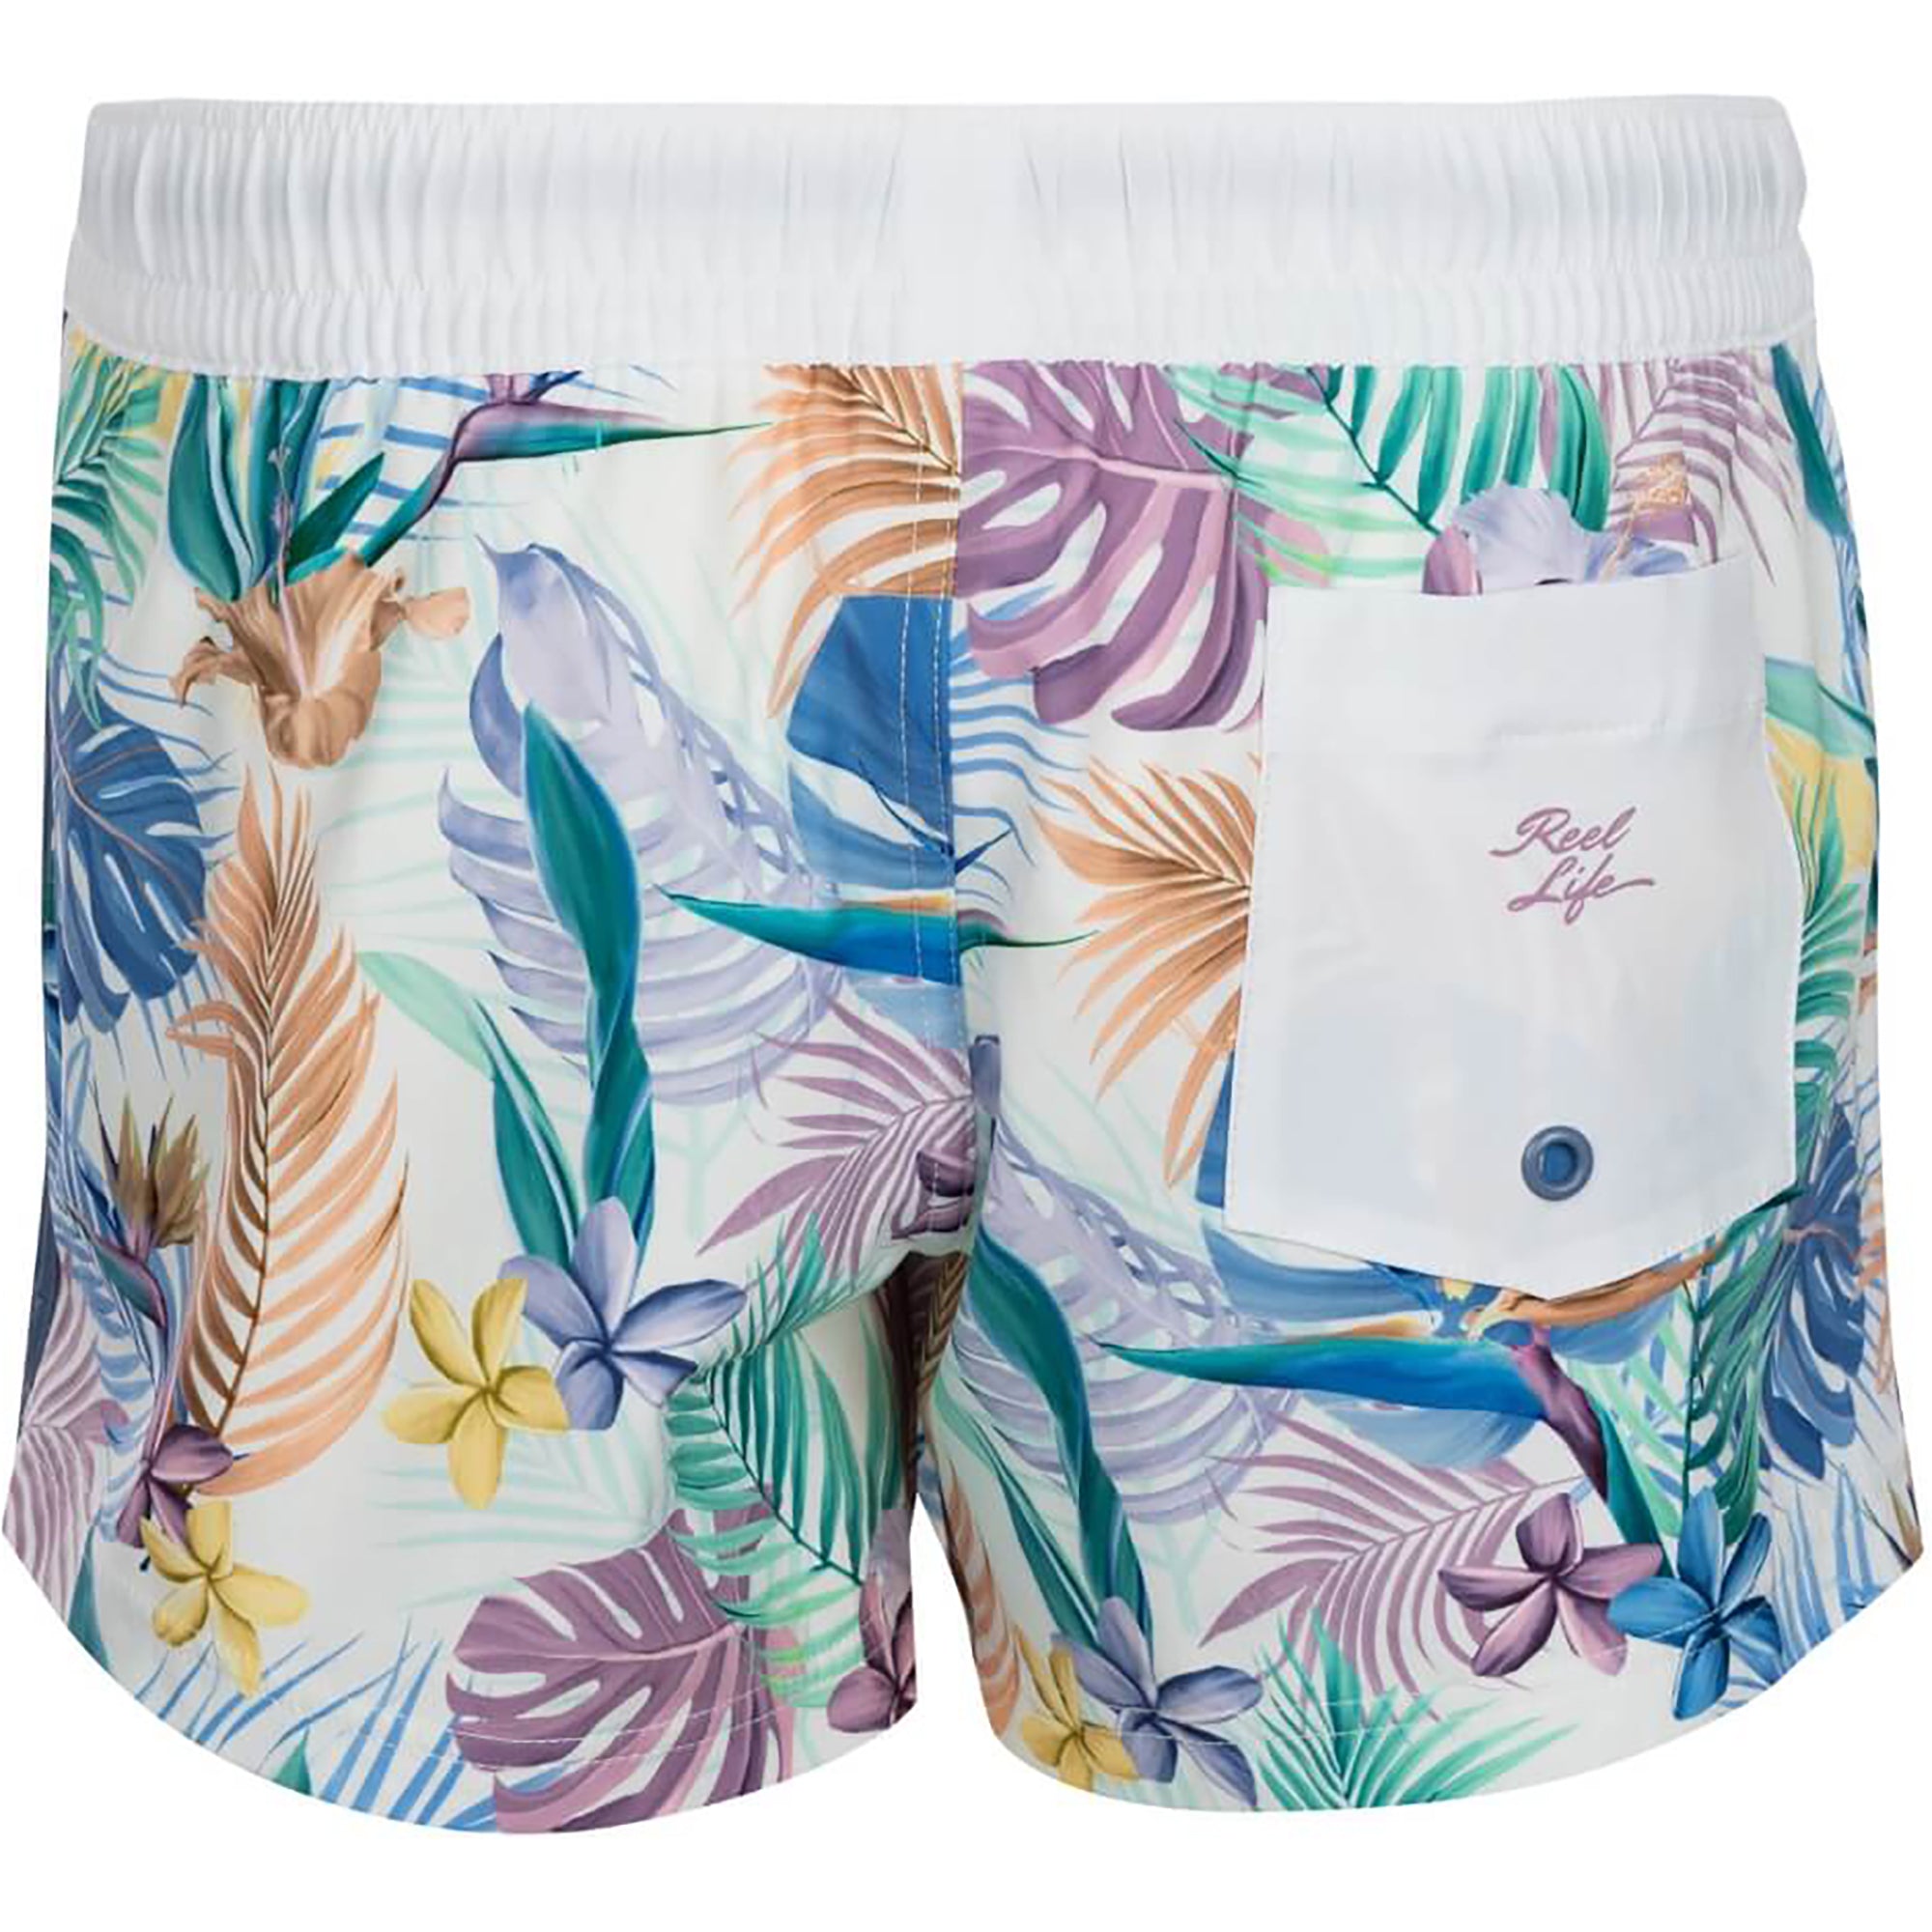 Reel Life Women's Marabella Tropical Explosion Sun Shorts - Multi